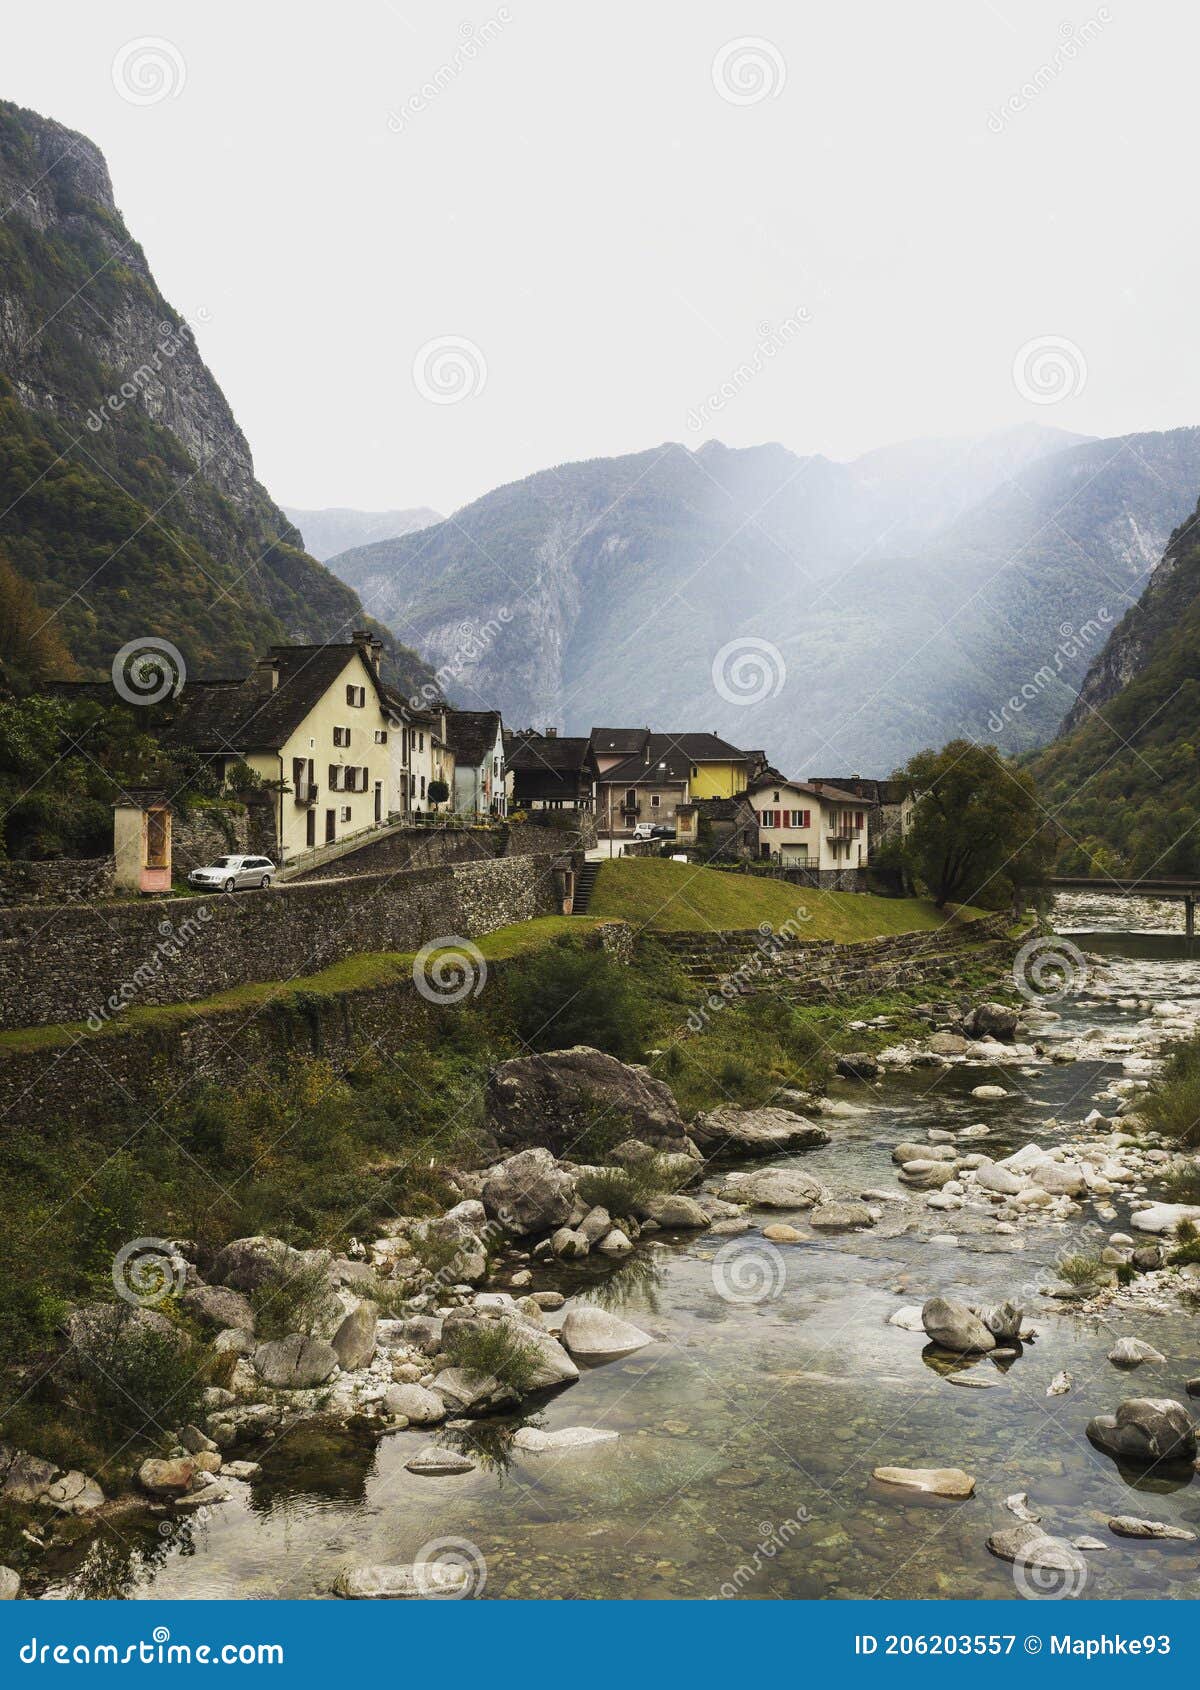 idyllic charming town rock stone houses village bignasco maggia and bavona river in vallemaggia ticino switzerland alps